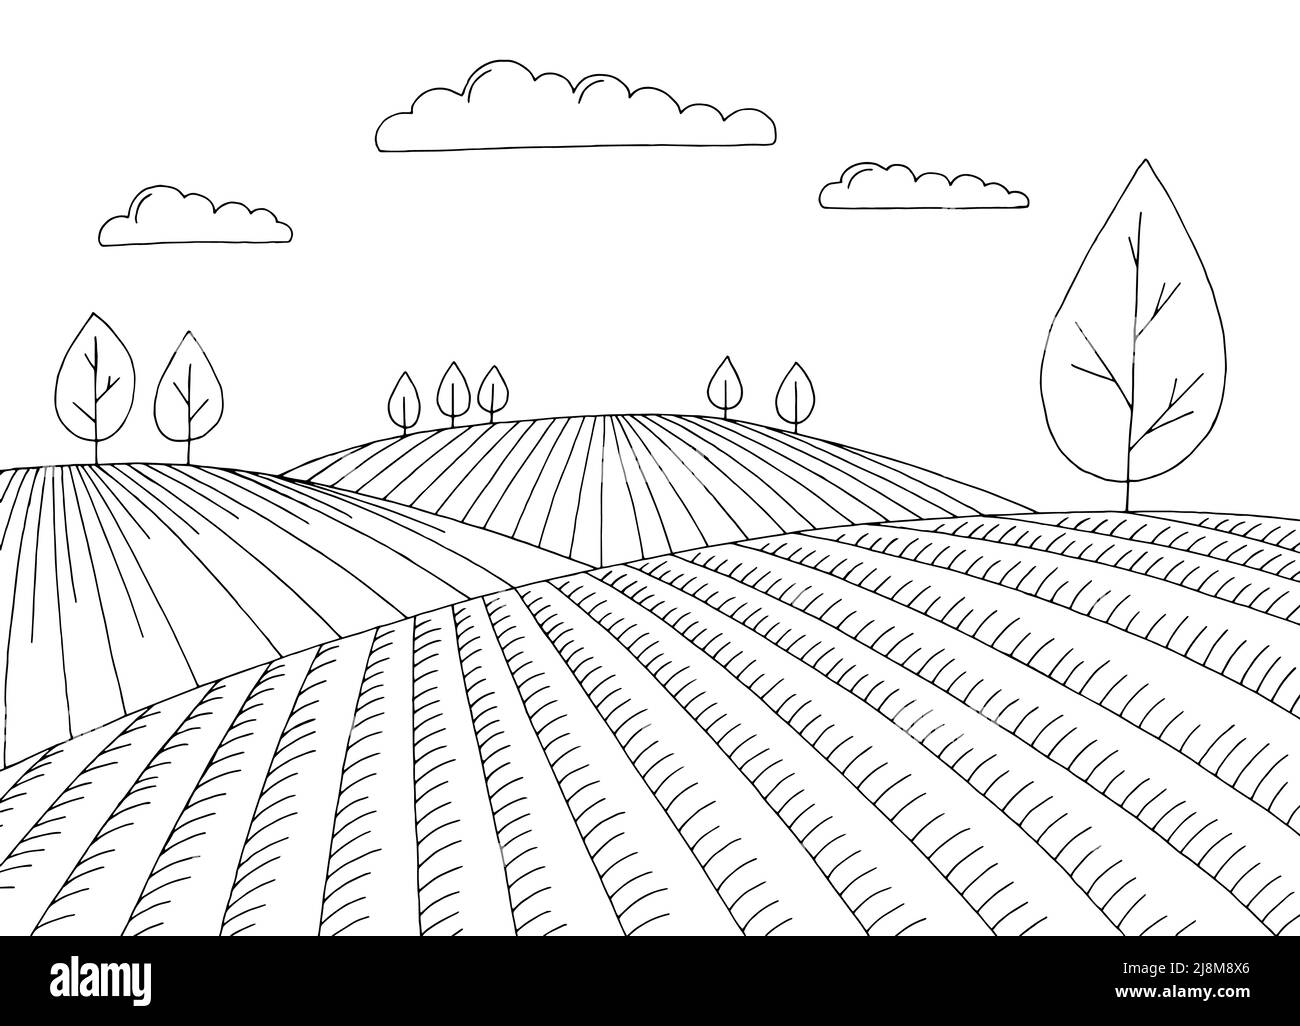 Feld Einfachheit Grafik schwarz weiß Landschaft Skizze Illustration Vektor Stock Vektor